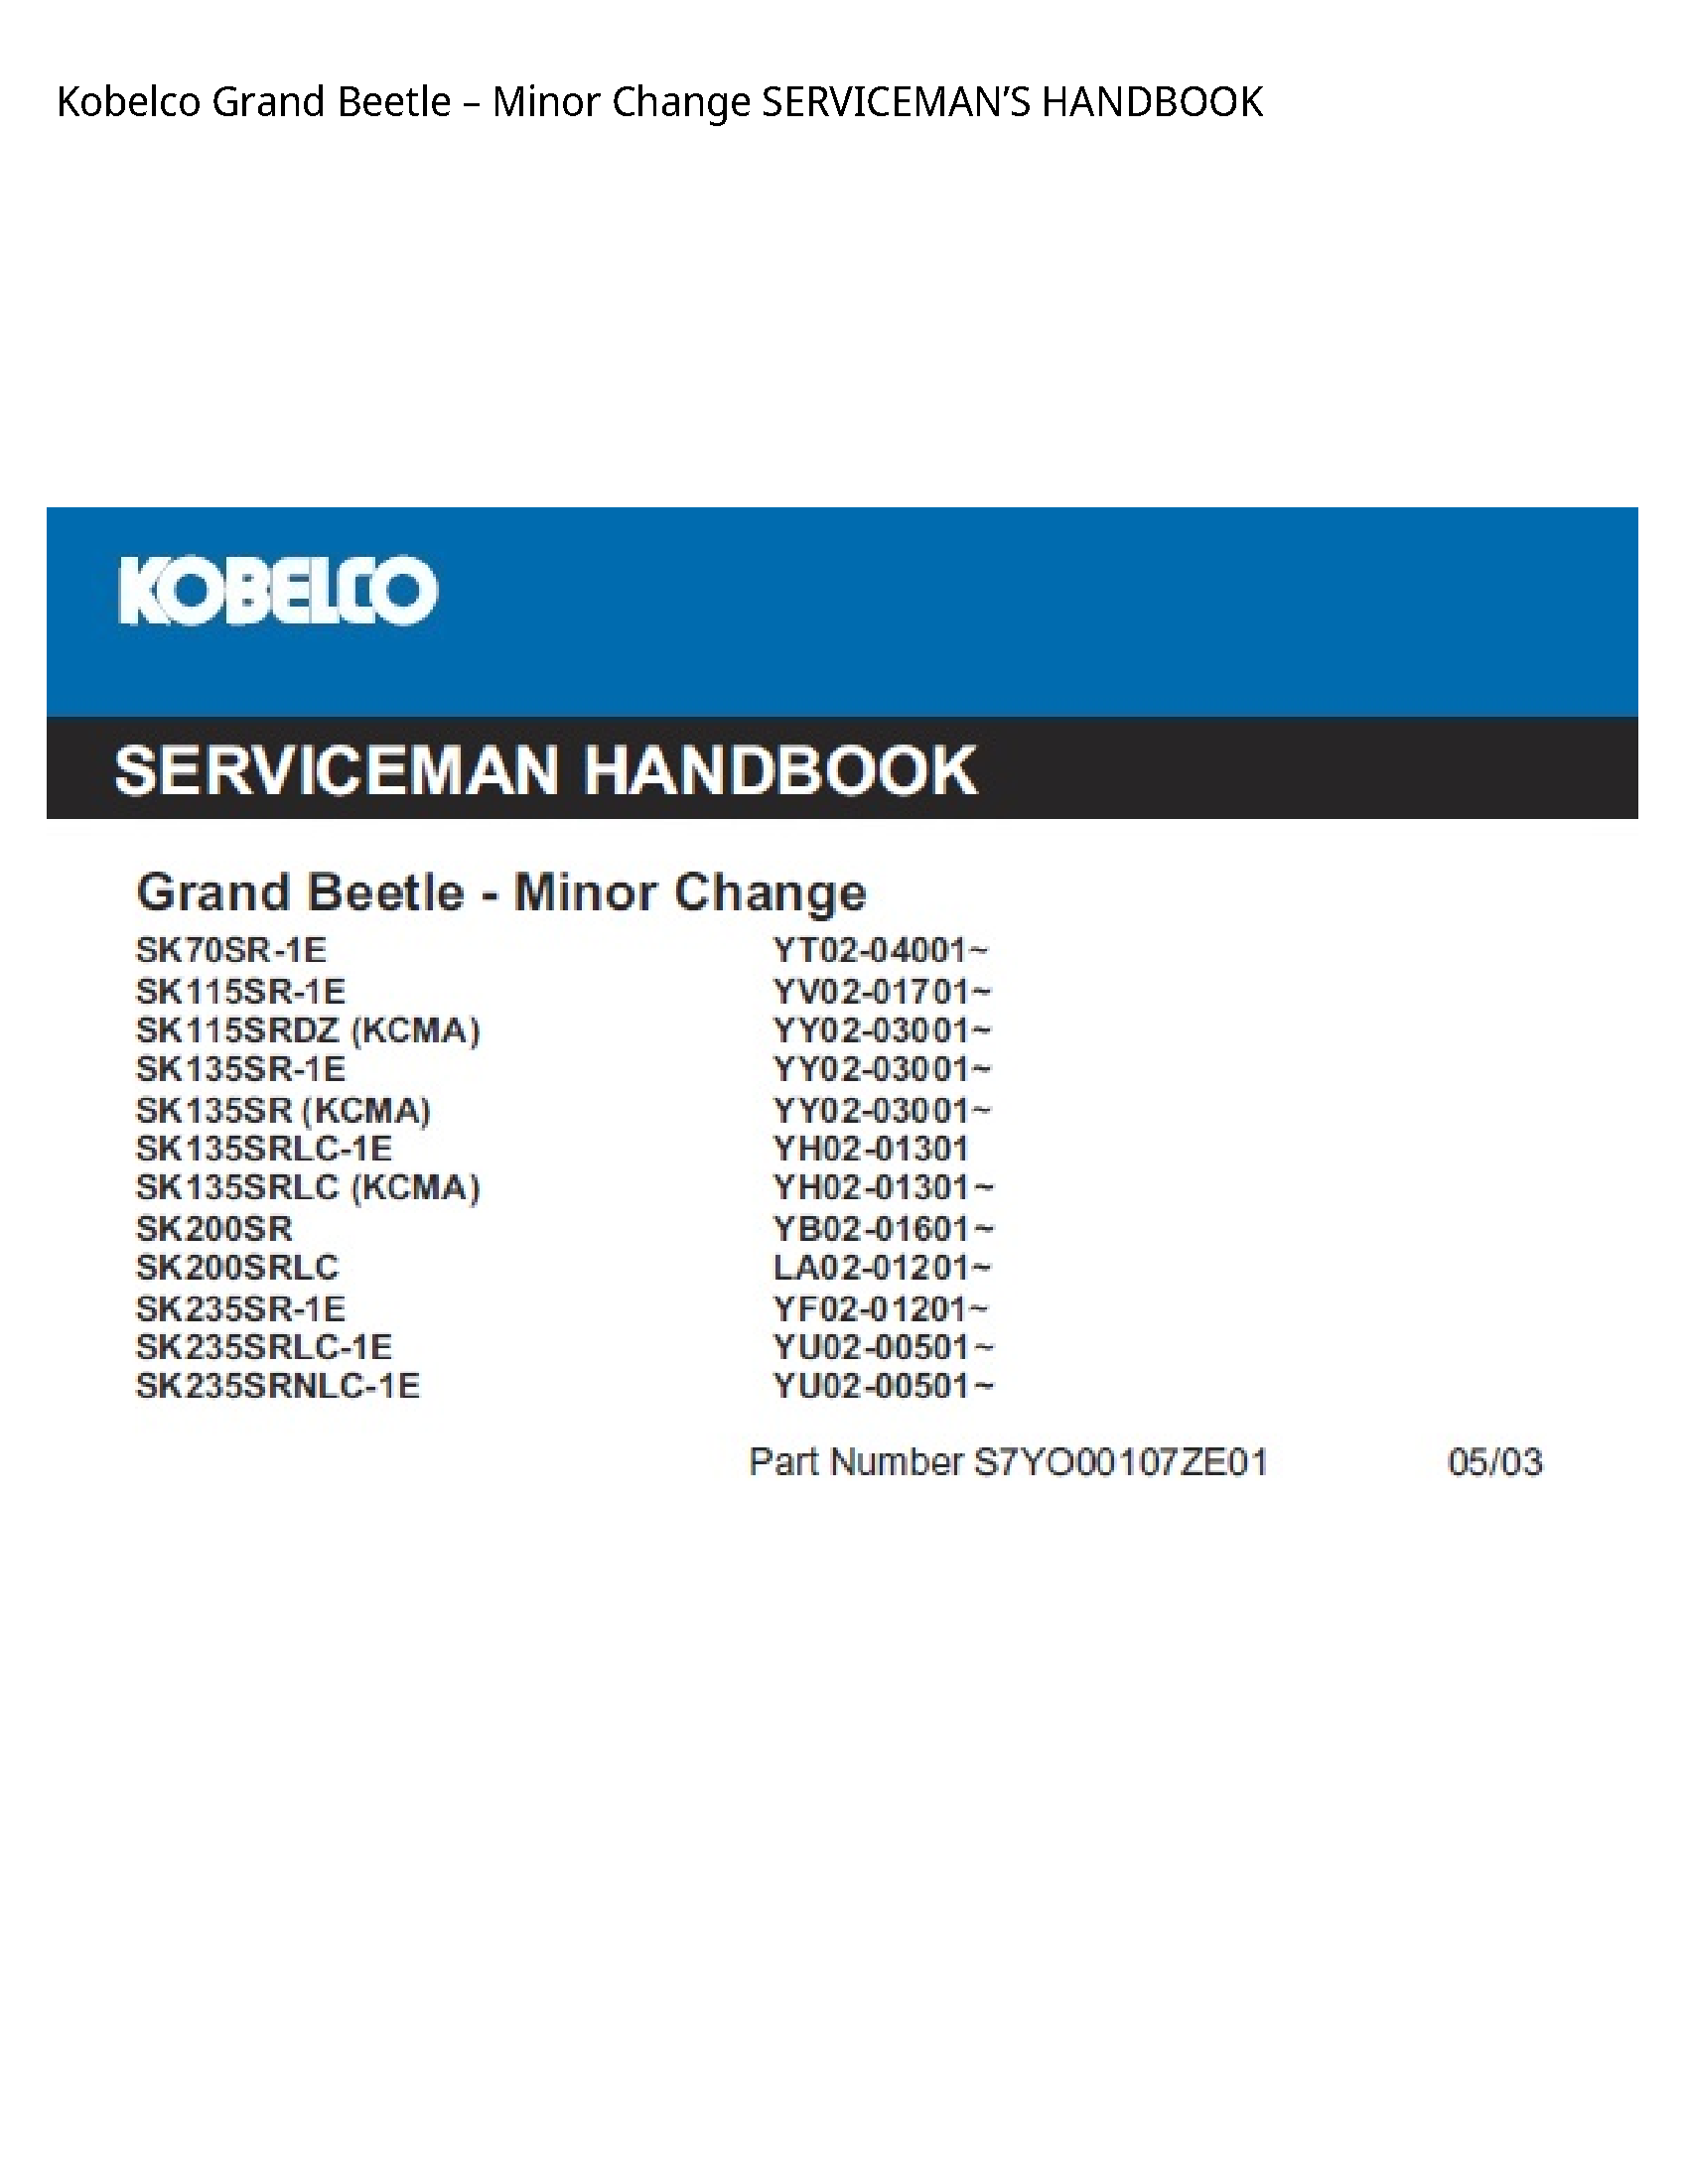 Kobelco Grand Beetle Minor Change SERVICEMAN’S HANDBOOK manual